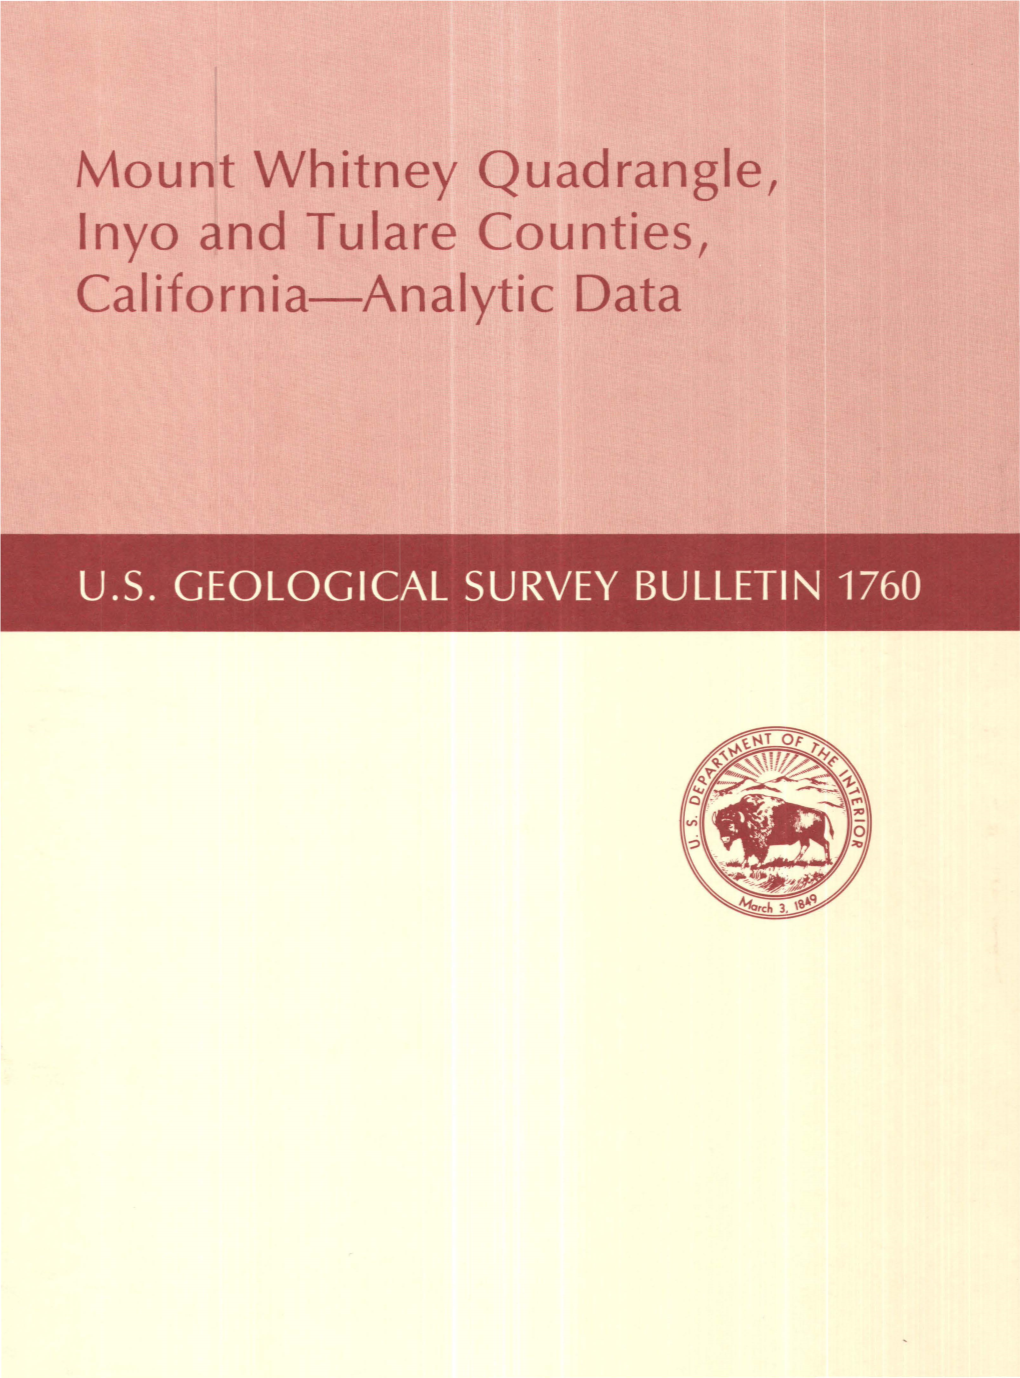 Mount Whitney Quadrangle, Lnyo and Tulare Counties, California-Analytic Data